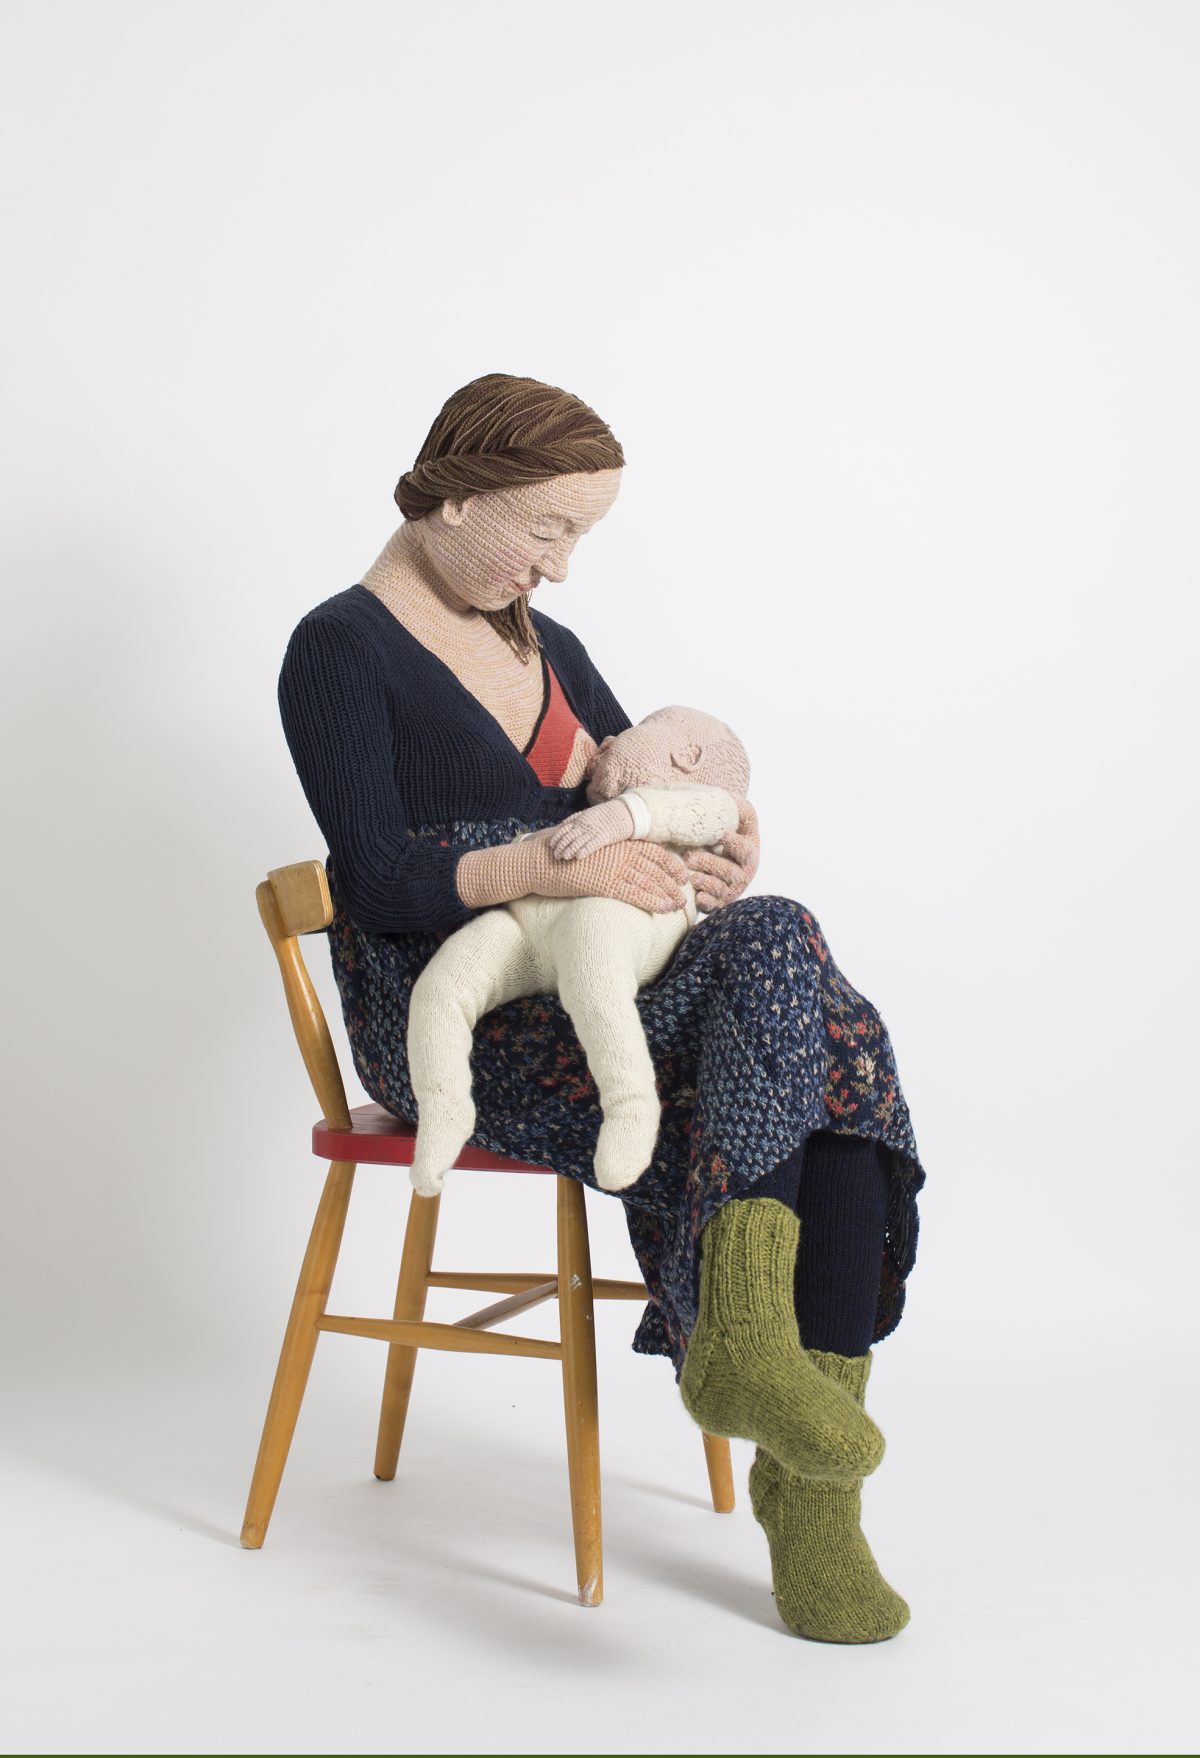 Crocheted Figures by Liisa Hietanen Village